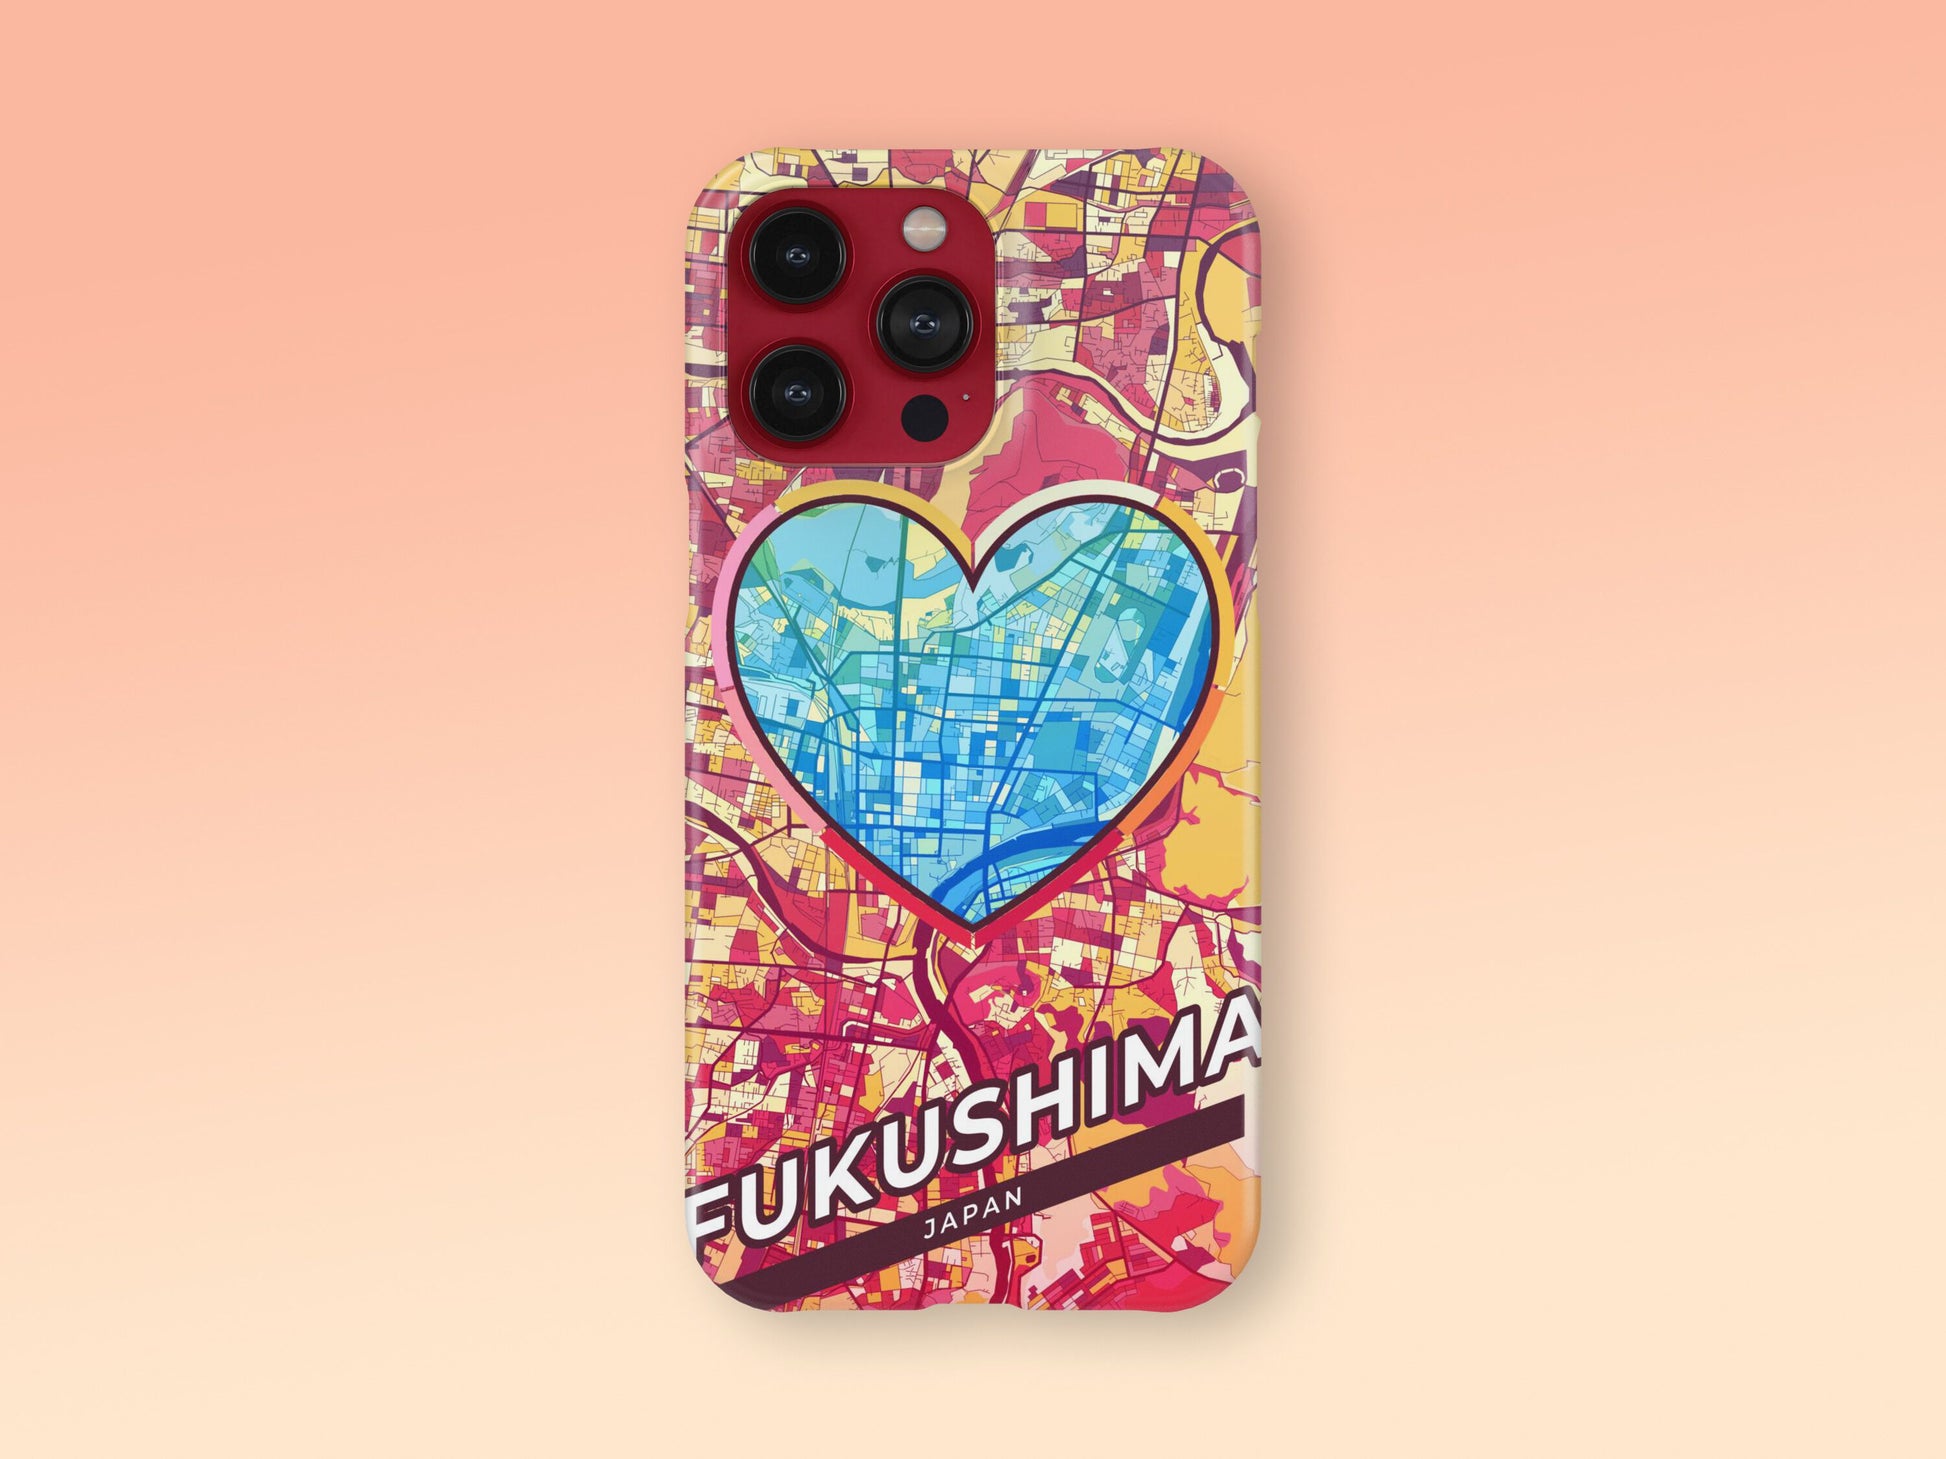 Fukushima Japan slim phone case with colorful icon. Birthday, wedding or housewarming gift. Couple match cases. 2